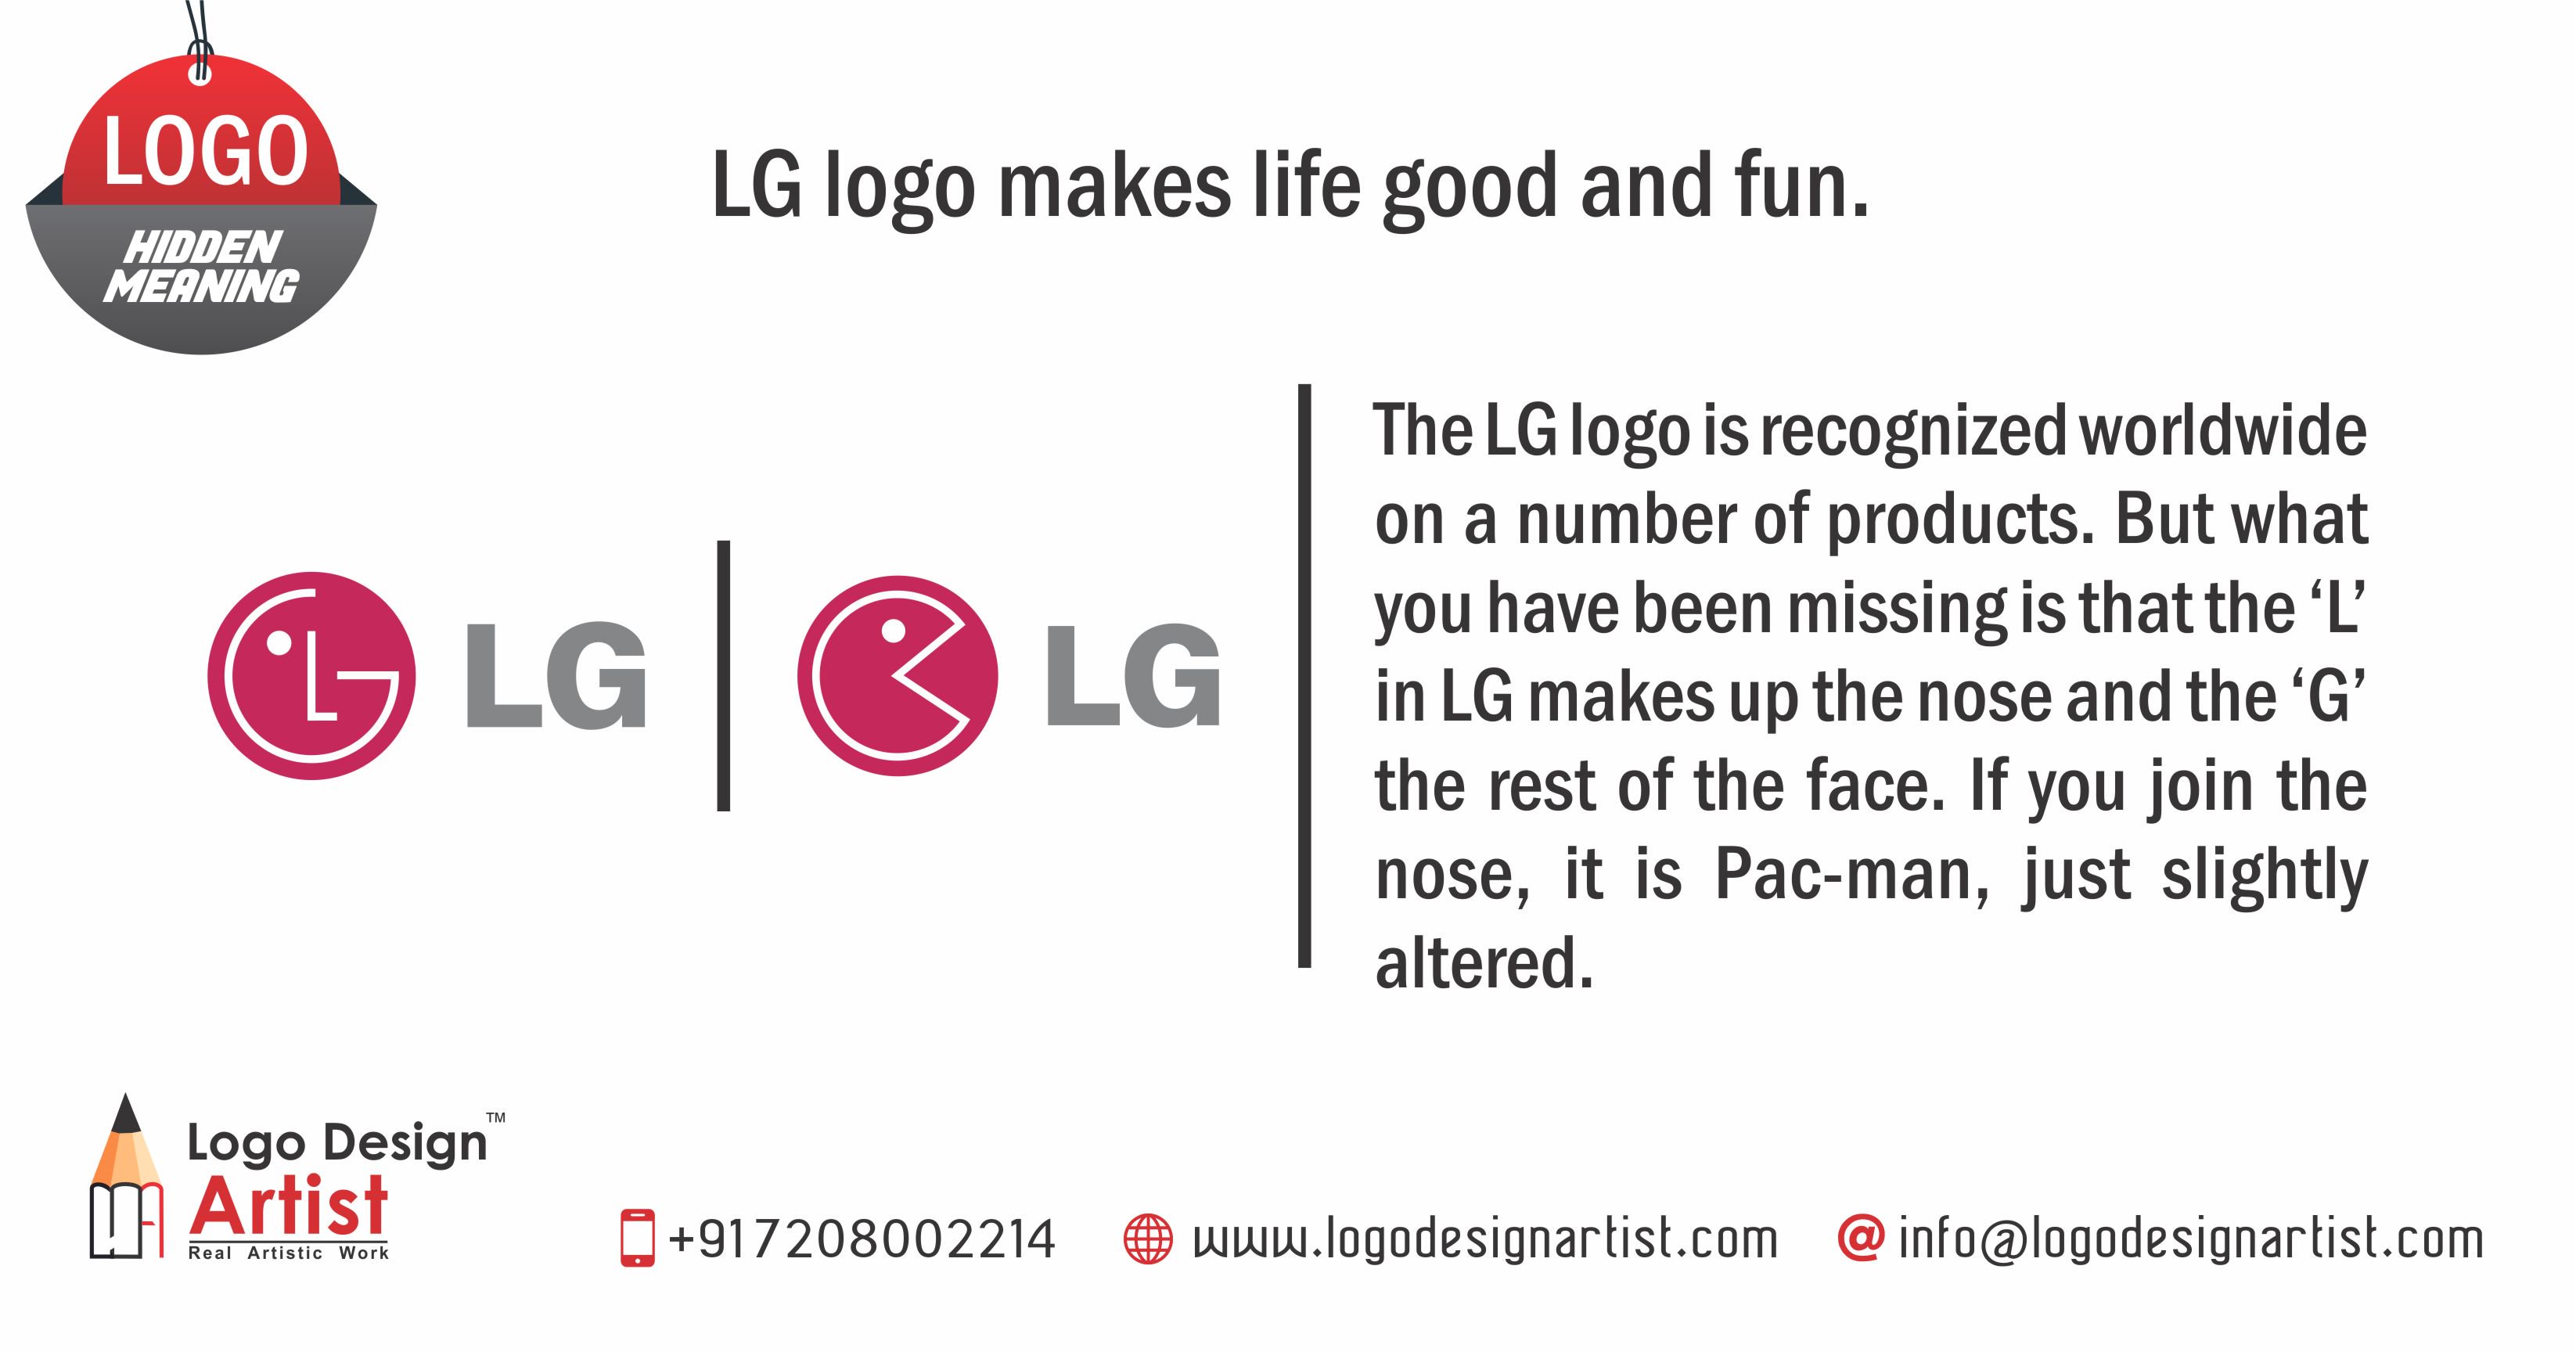 LOGO Design Artist on X: <<< LOGO HIDDEN MEANING >>> LG logo